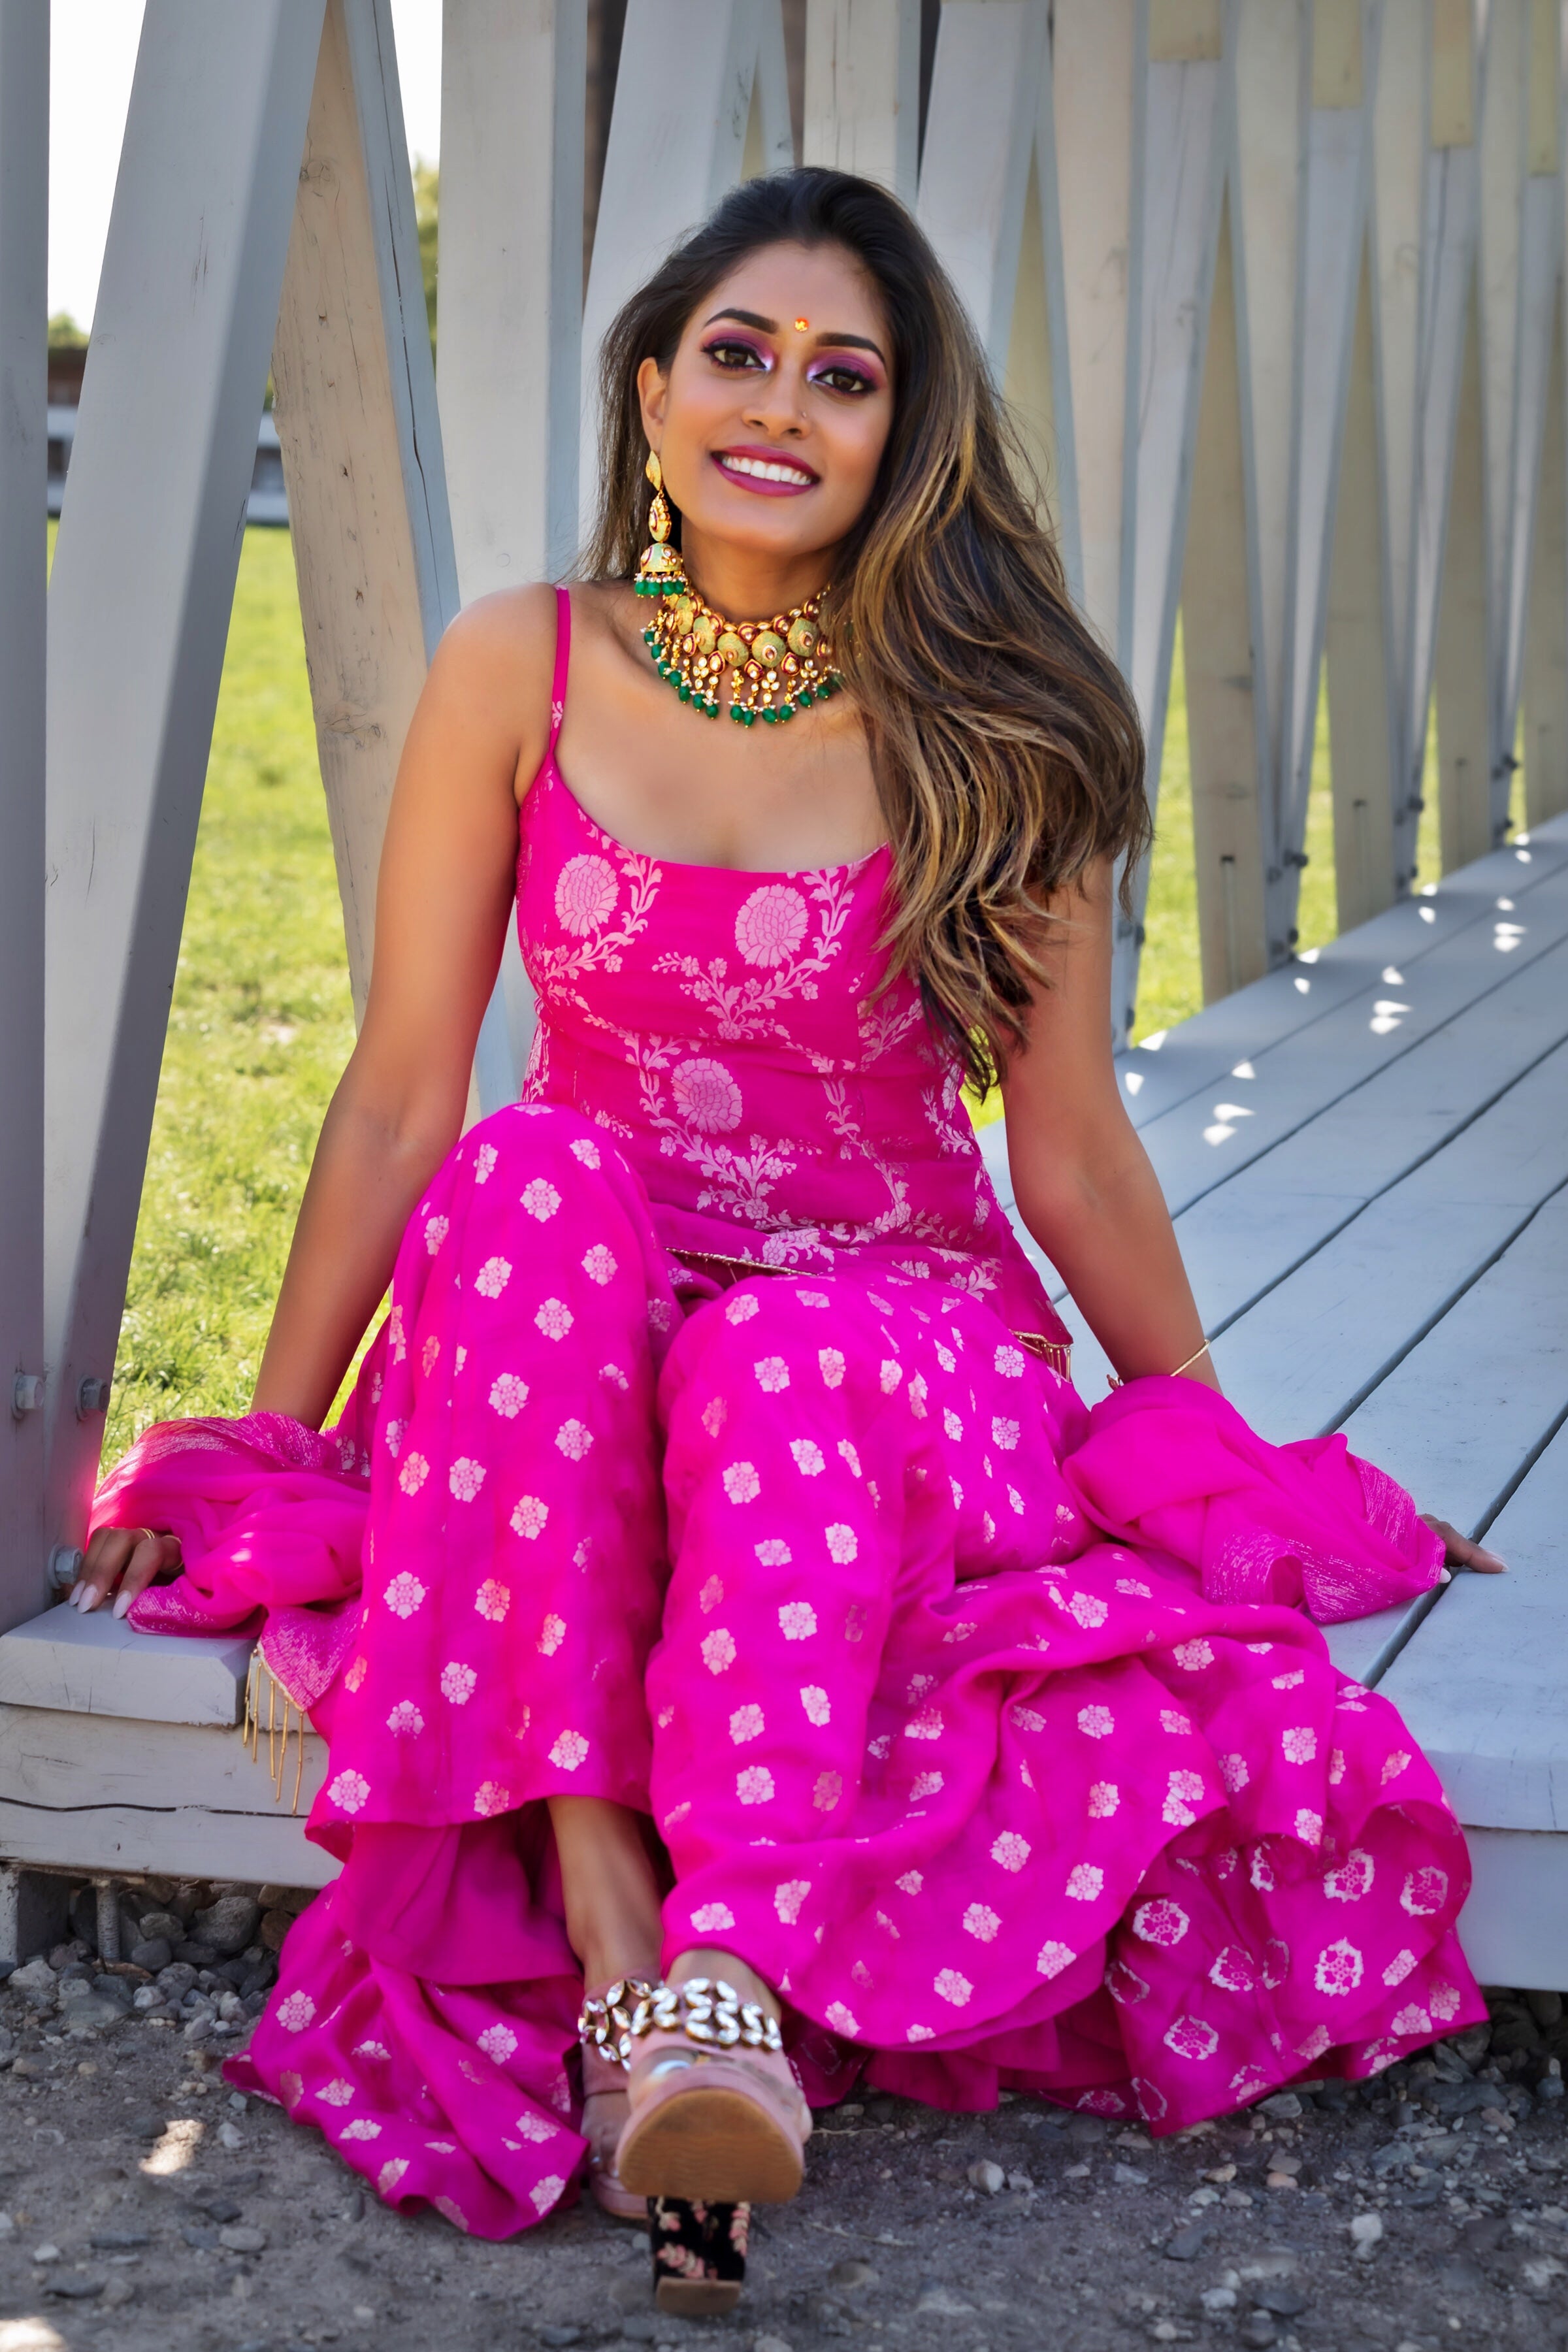 Rani Pink Sharara with Spagetti Strap Top in Silk Brocade Fabric - Fusion Indian Wear - Shop at Designer Indian Clothes Boutique in Atlanta, Georgia - Sushma Patel